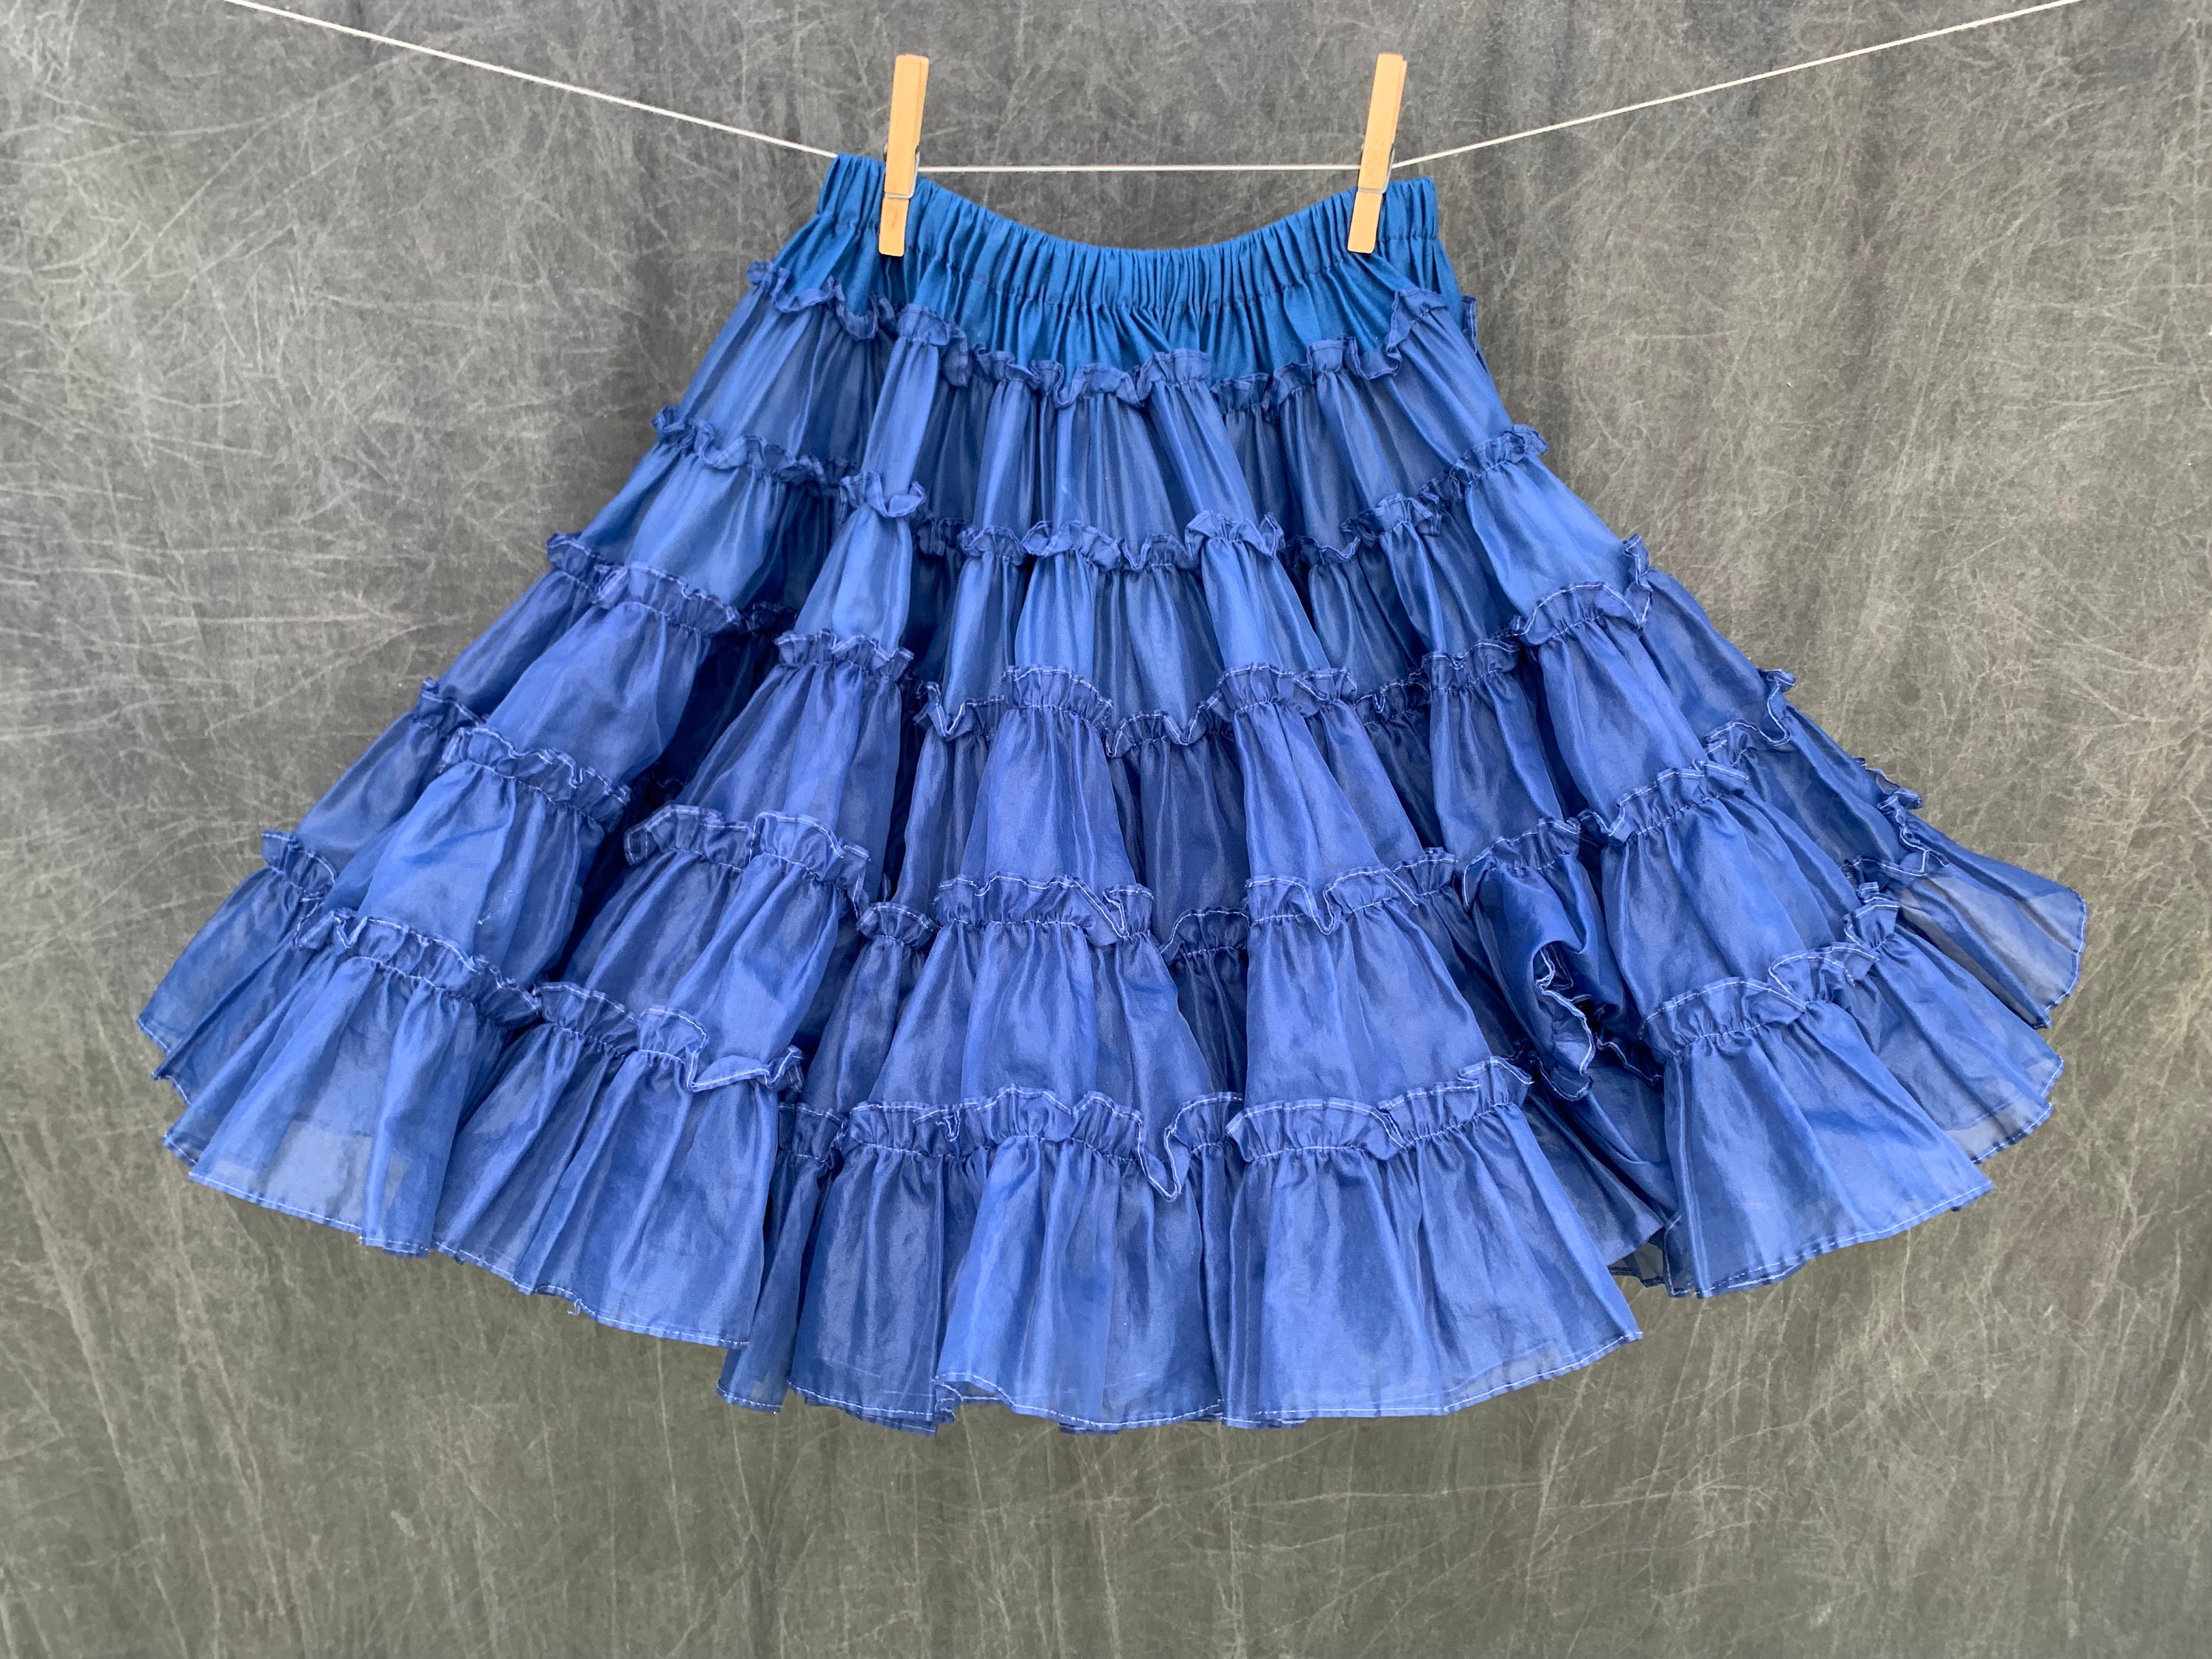 Satin Lycra Adjustable Petticoat for Saree, Underskirt for Dresses